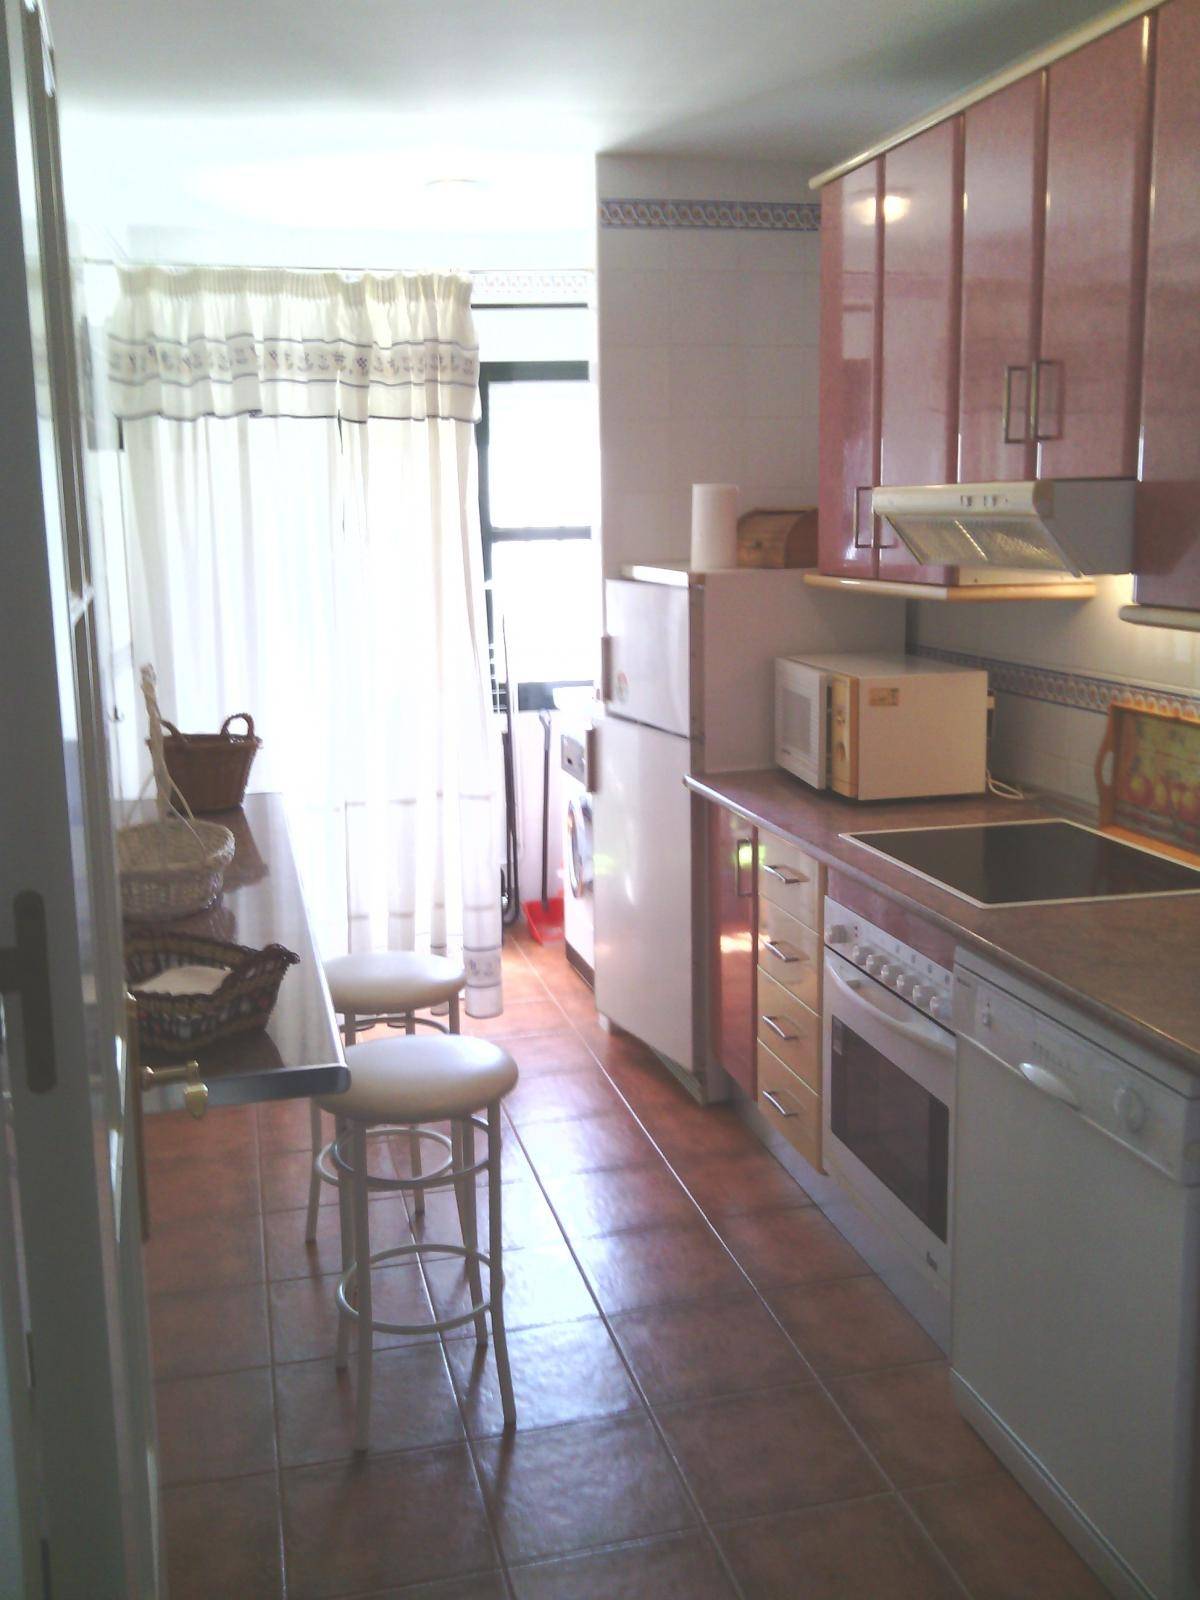 Flat for rent in Costa Ballena - Largo norte (Rota)